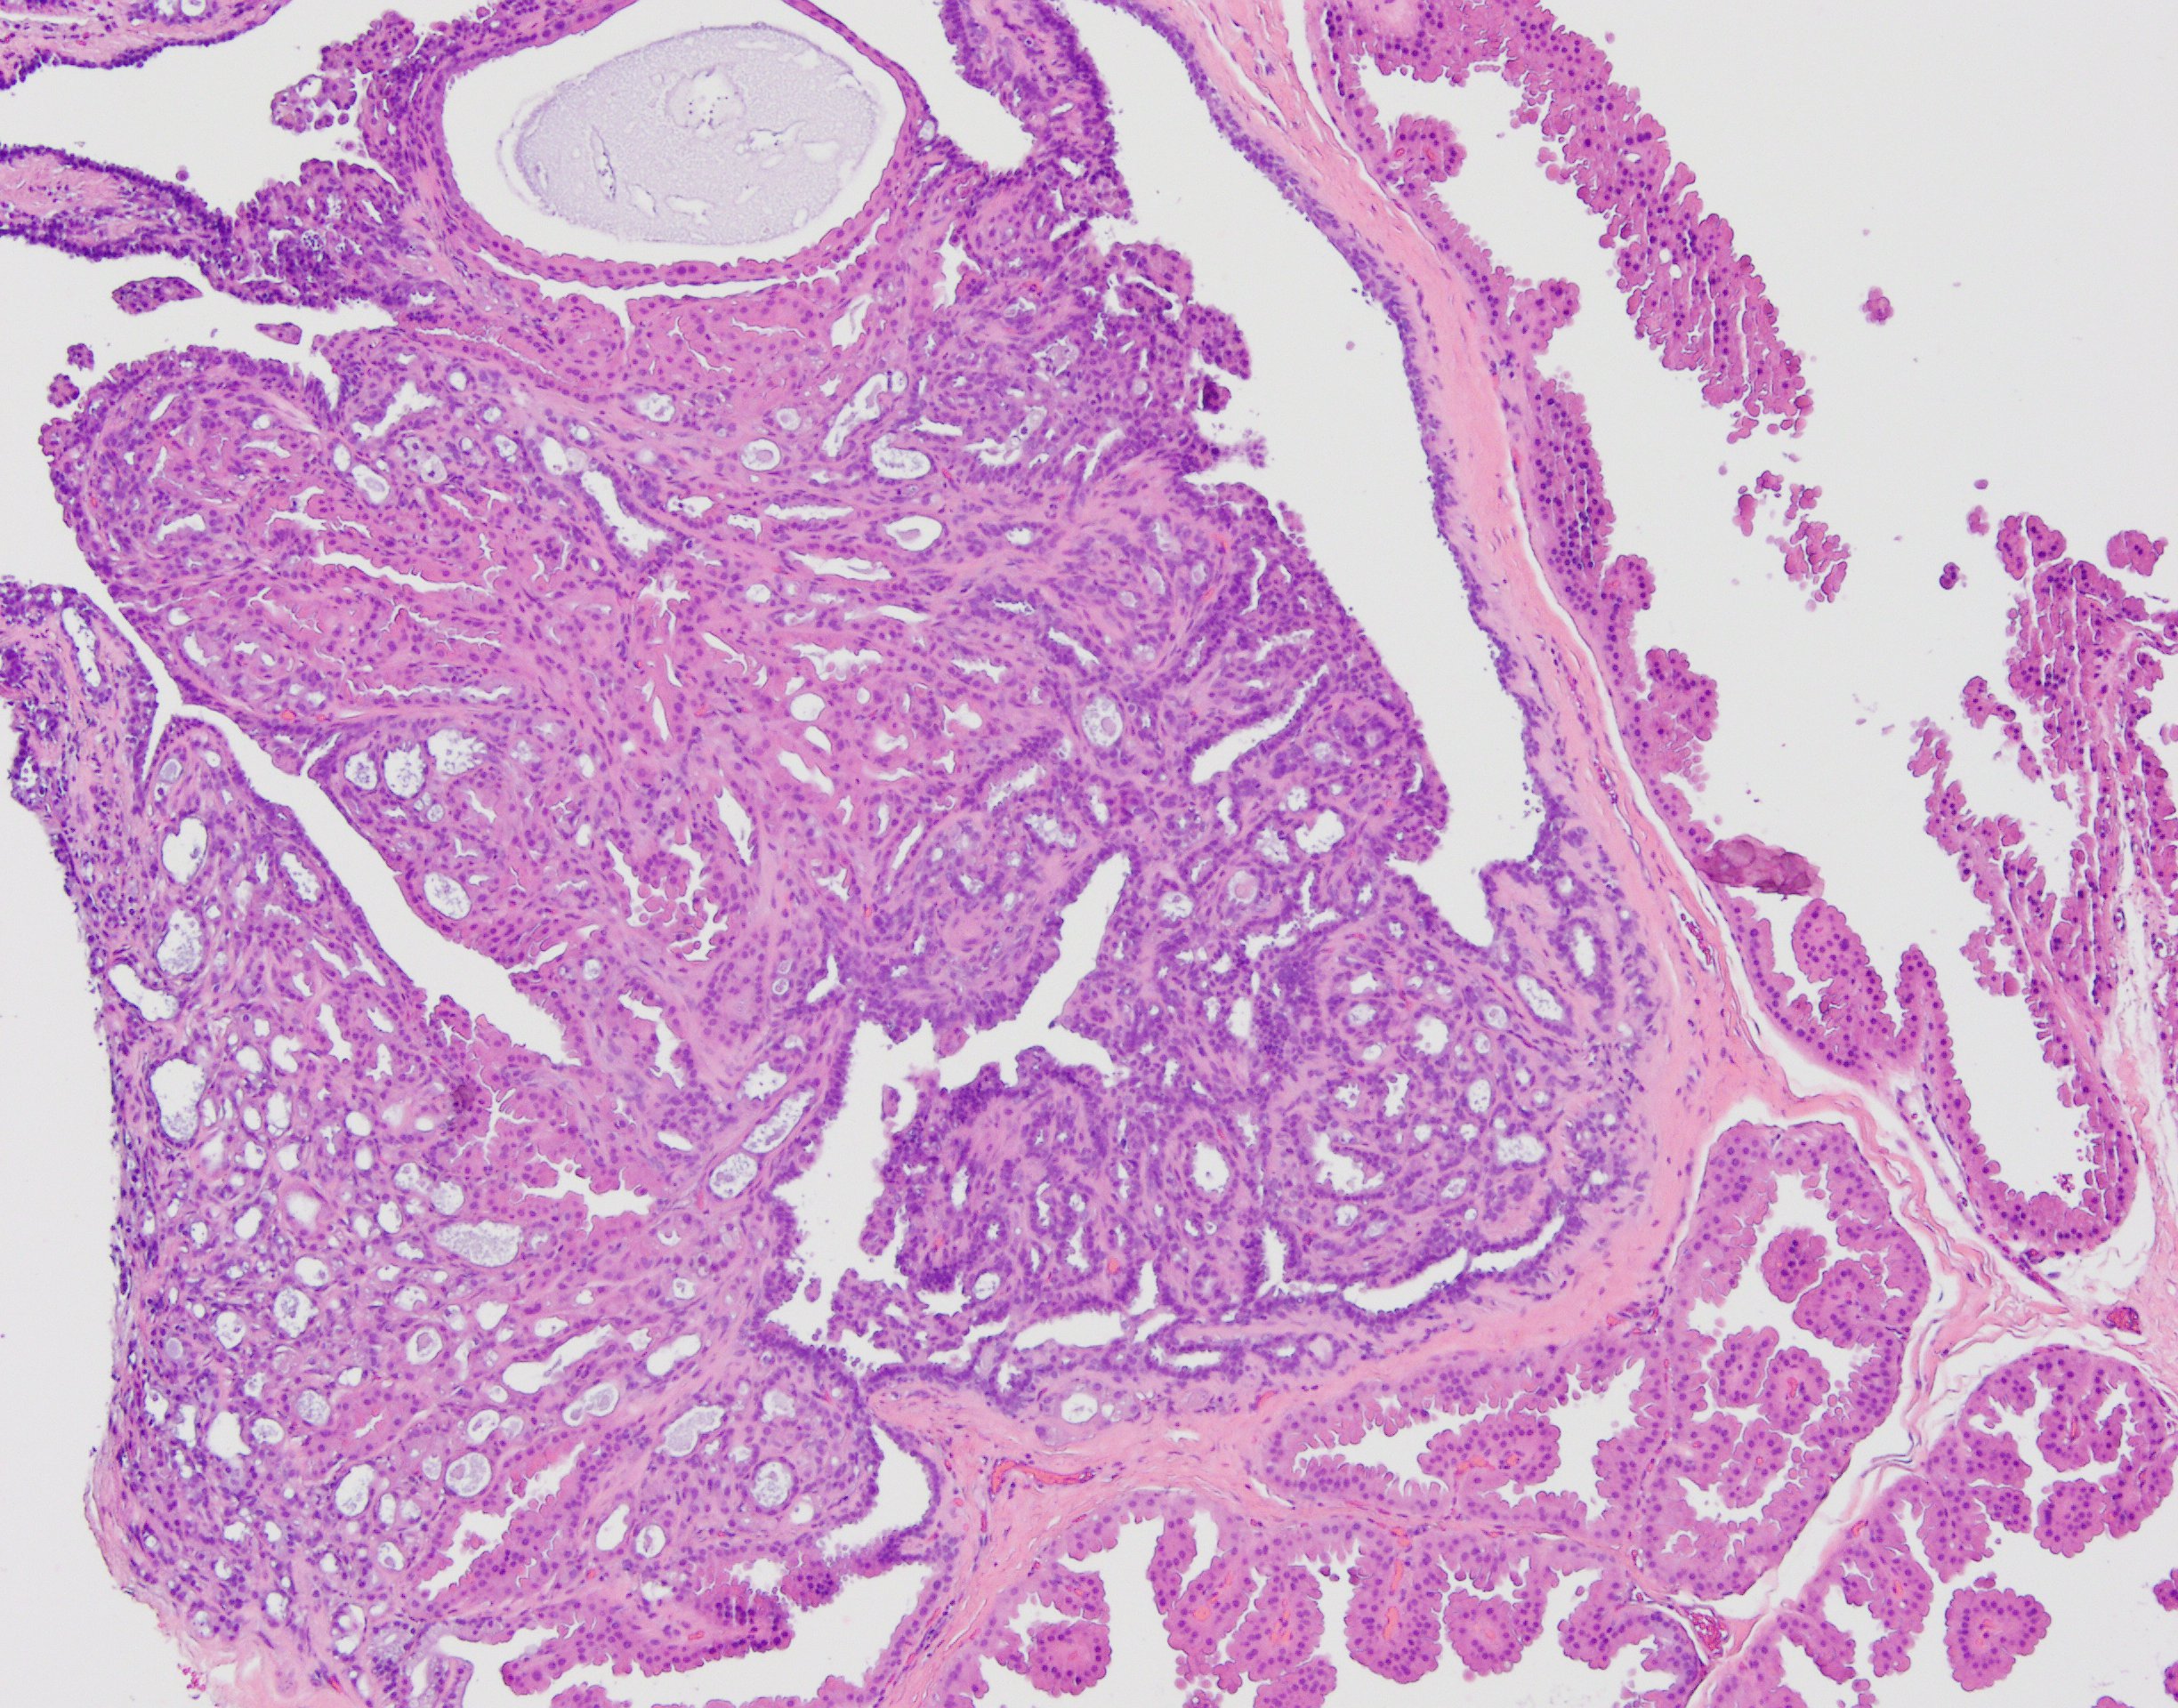 intraductal papilloma with extensive apocrine metaplasia